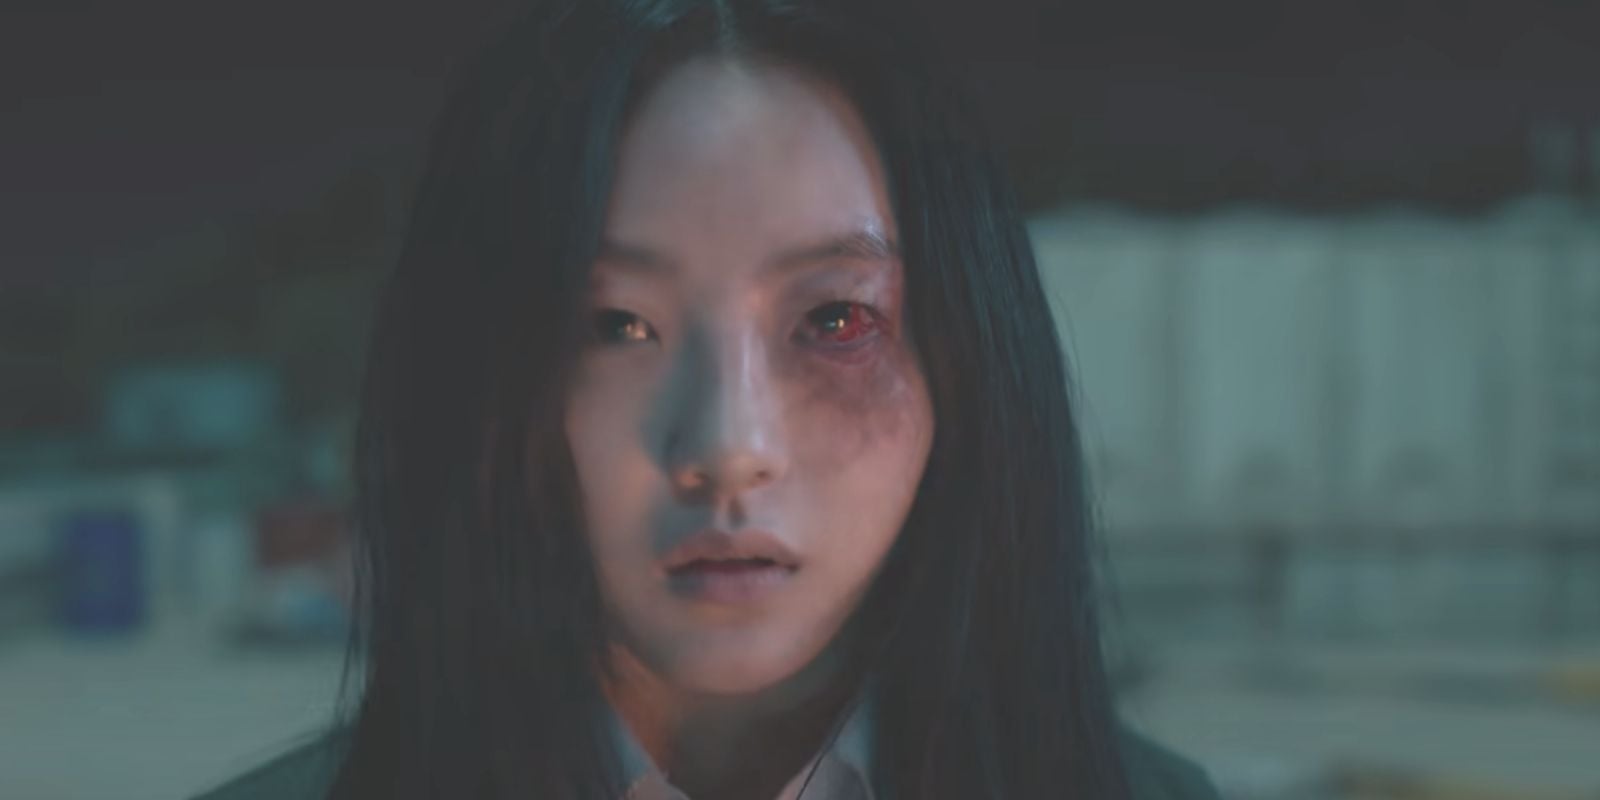 Watch: “All Of Us Are Dead” Stars Yoon Chan Young, Park Ji Hu, Cho Yi Hyun,  And Lomon Confirm Drama's Return With Season 2